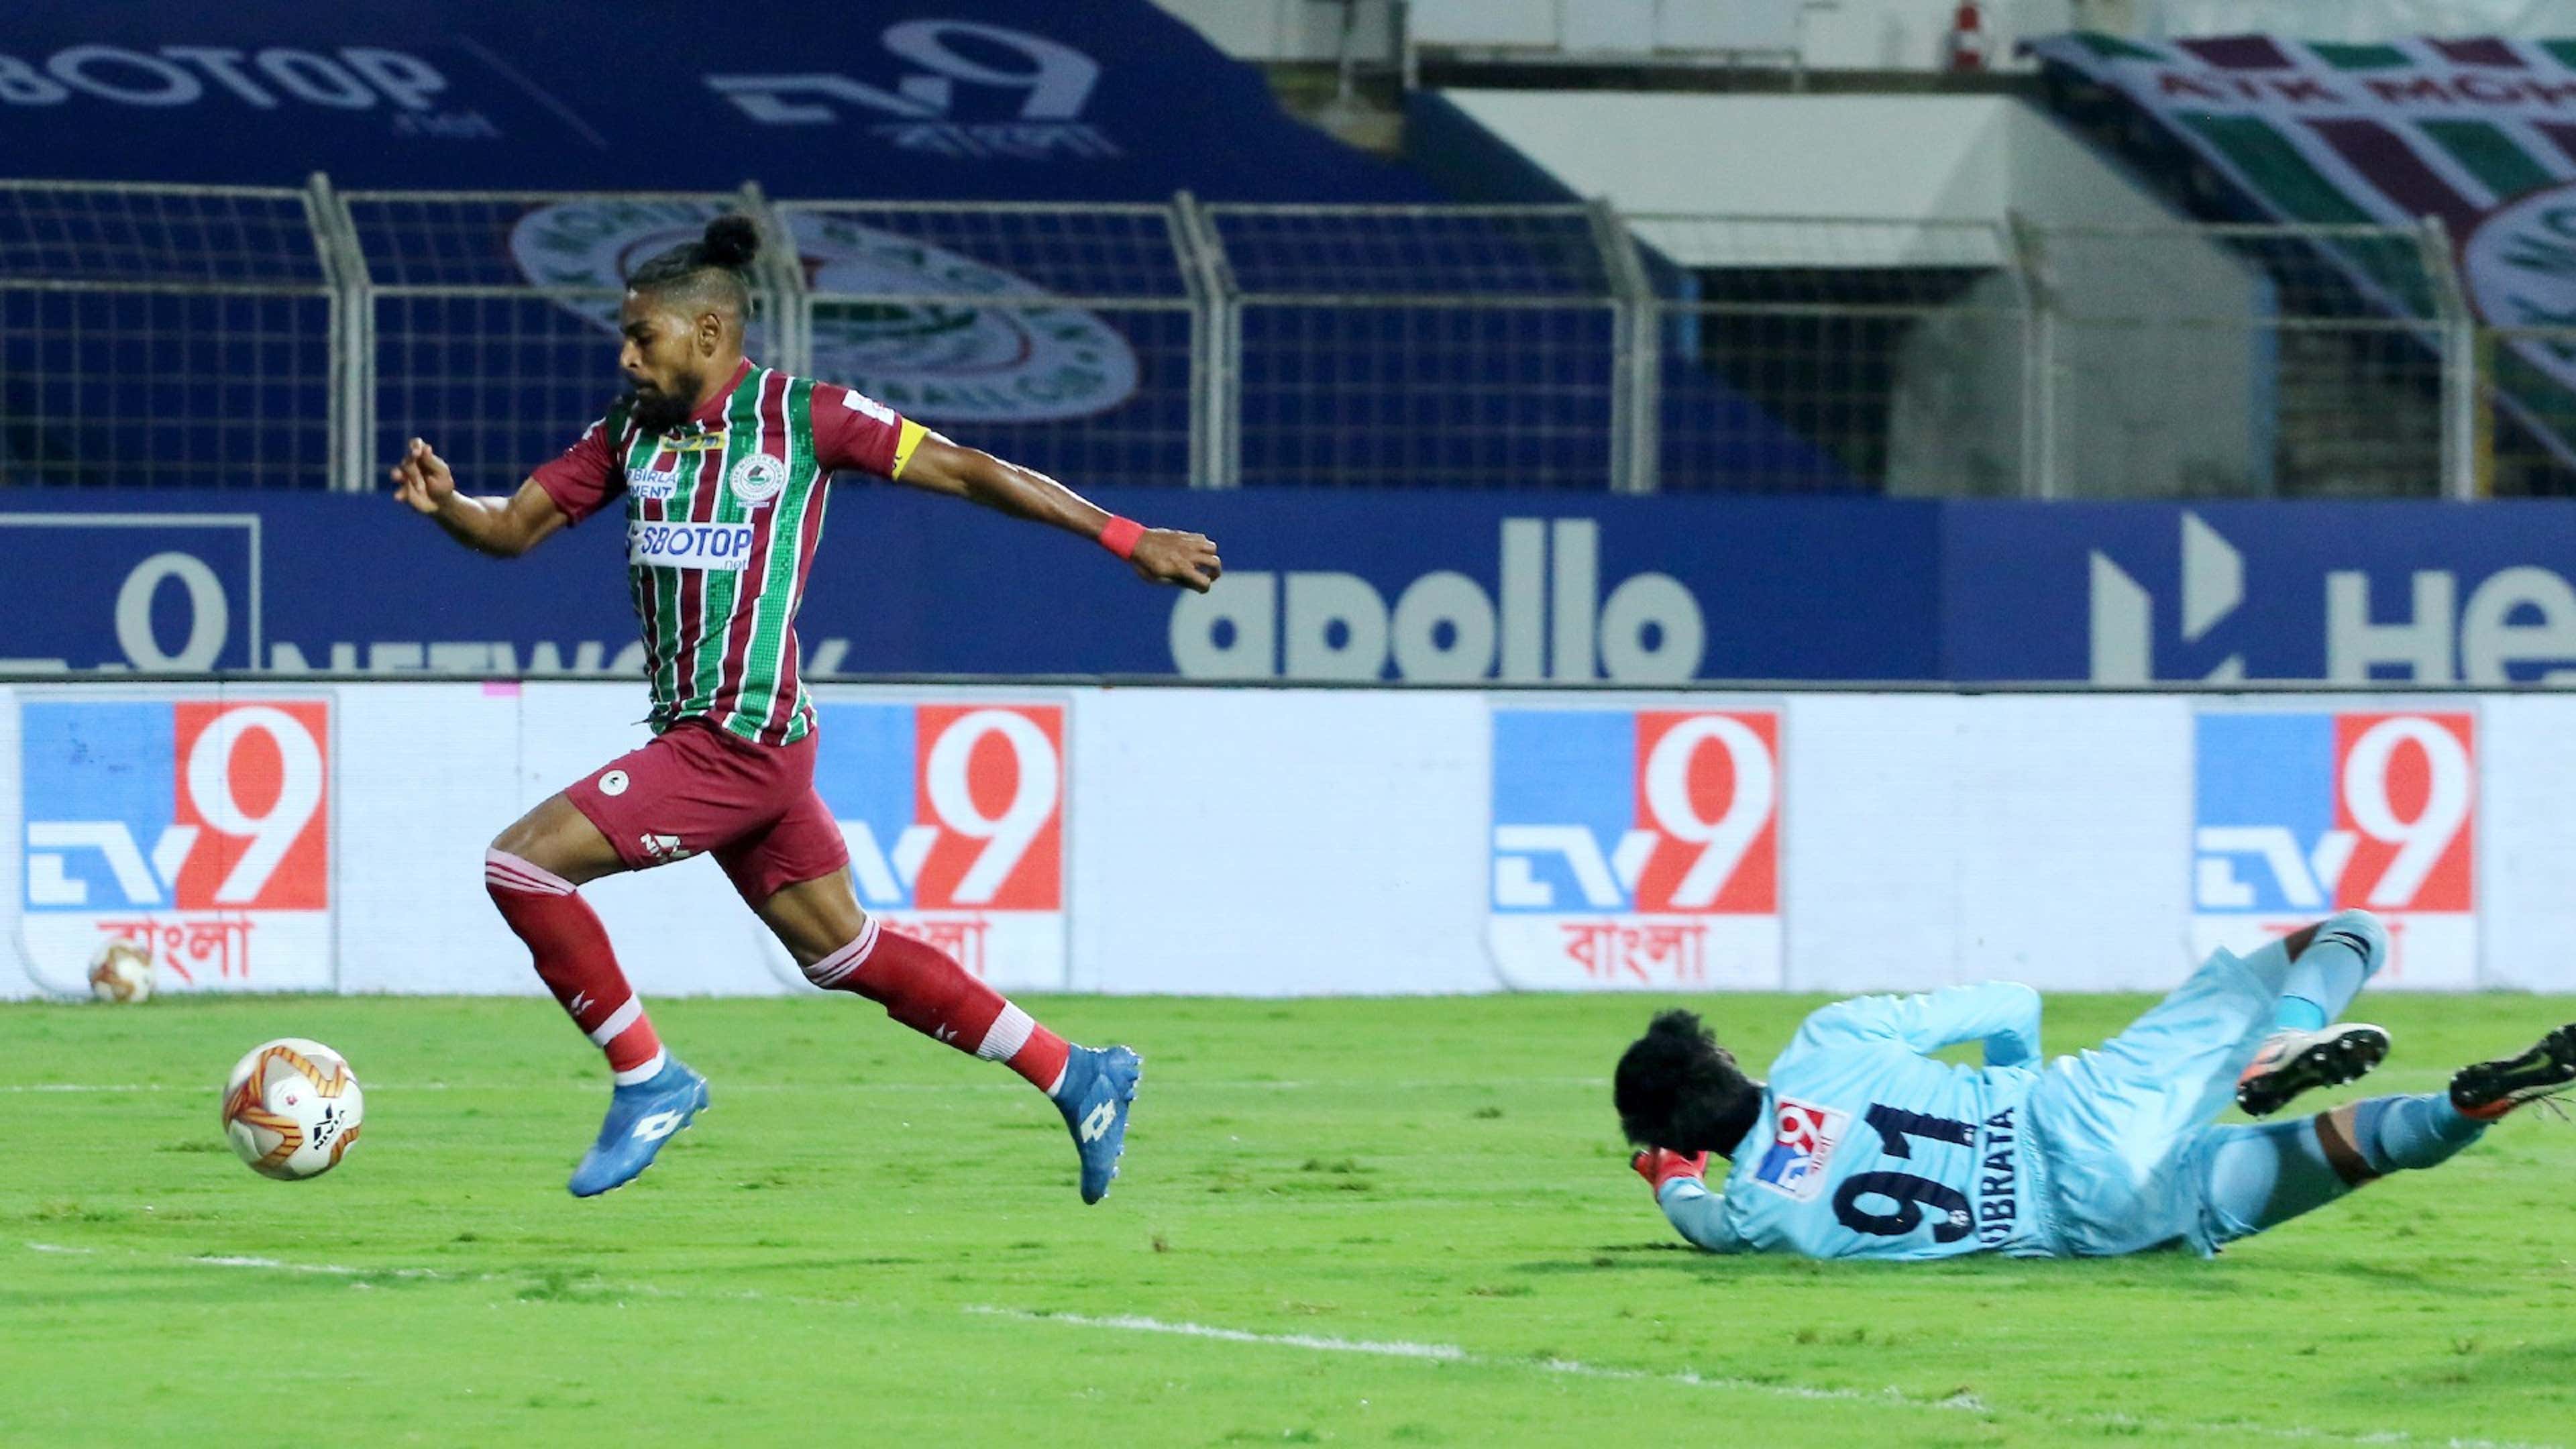 'Roy Krishna masterclass' - ATK Mohun Bagan's big-game player steps up ...